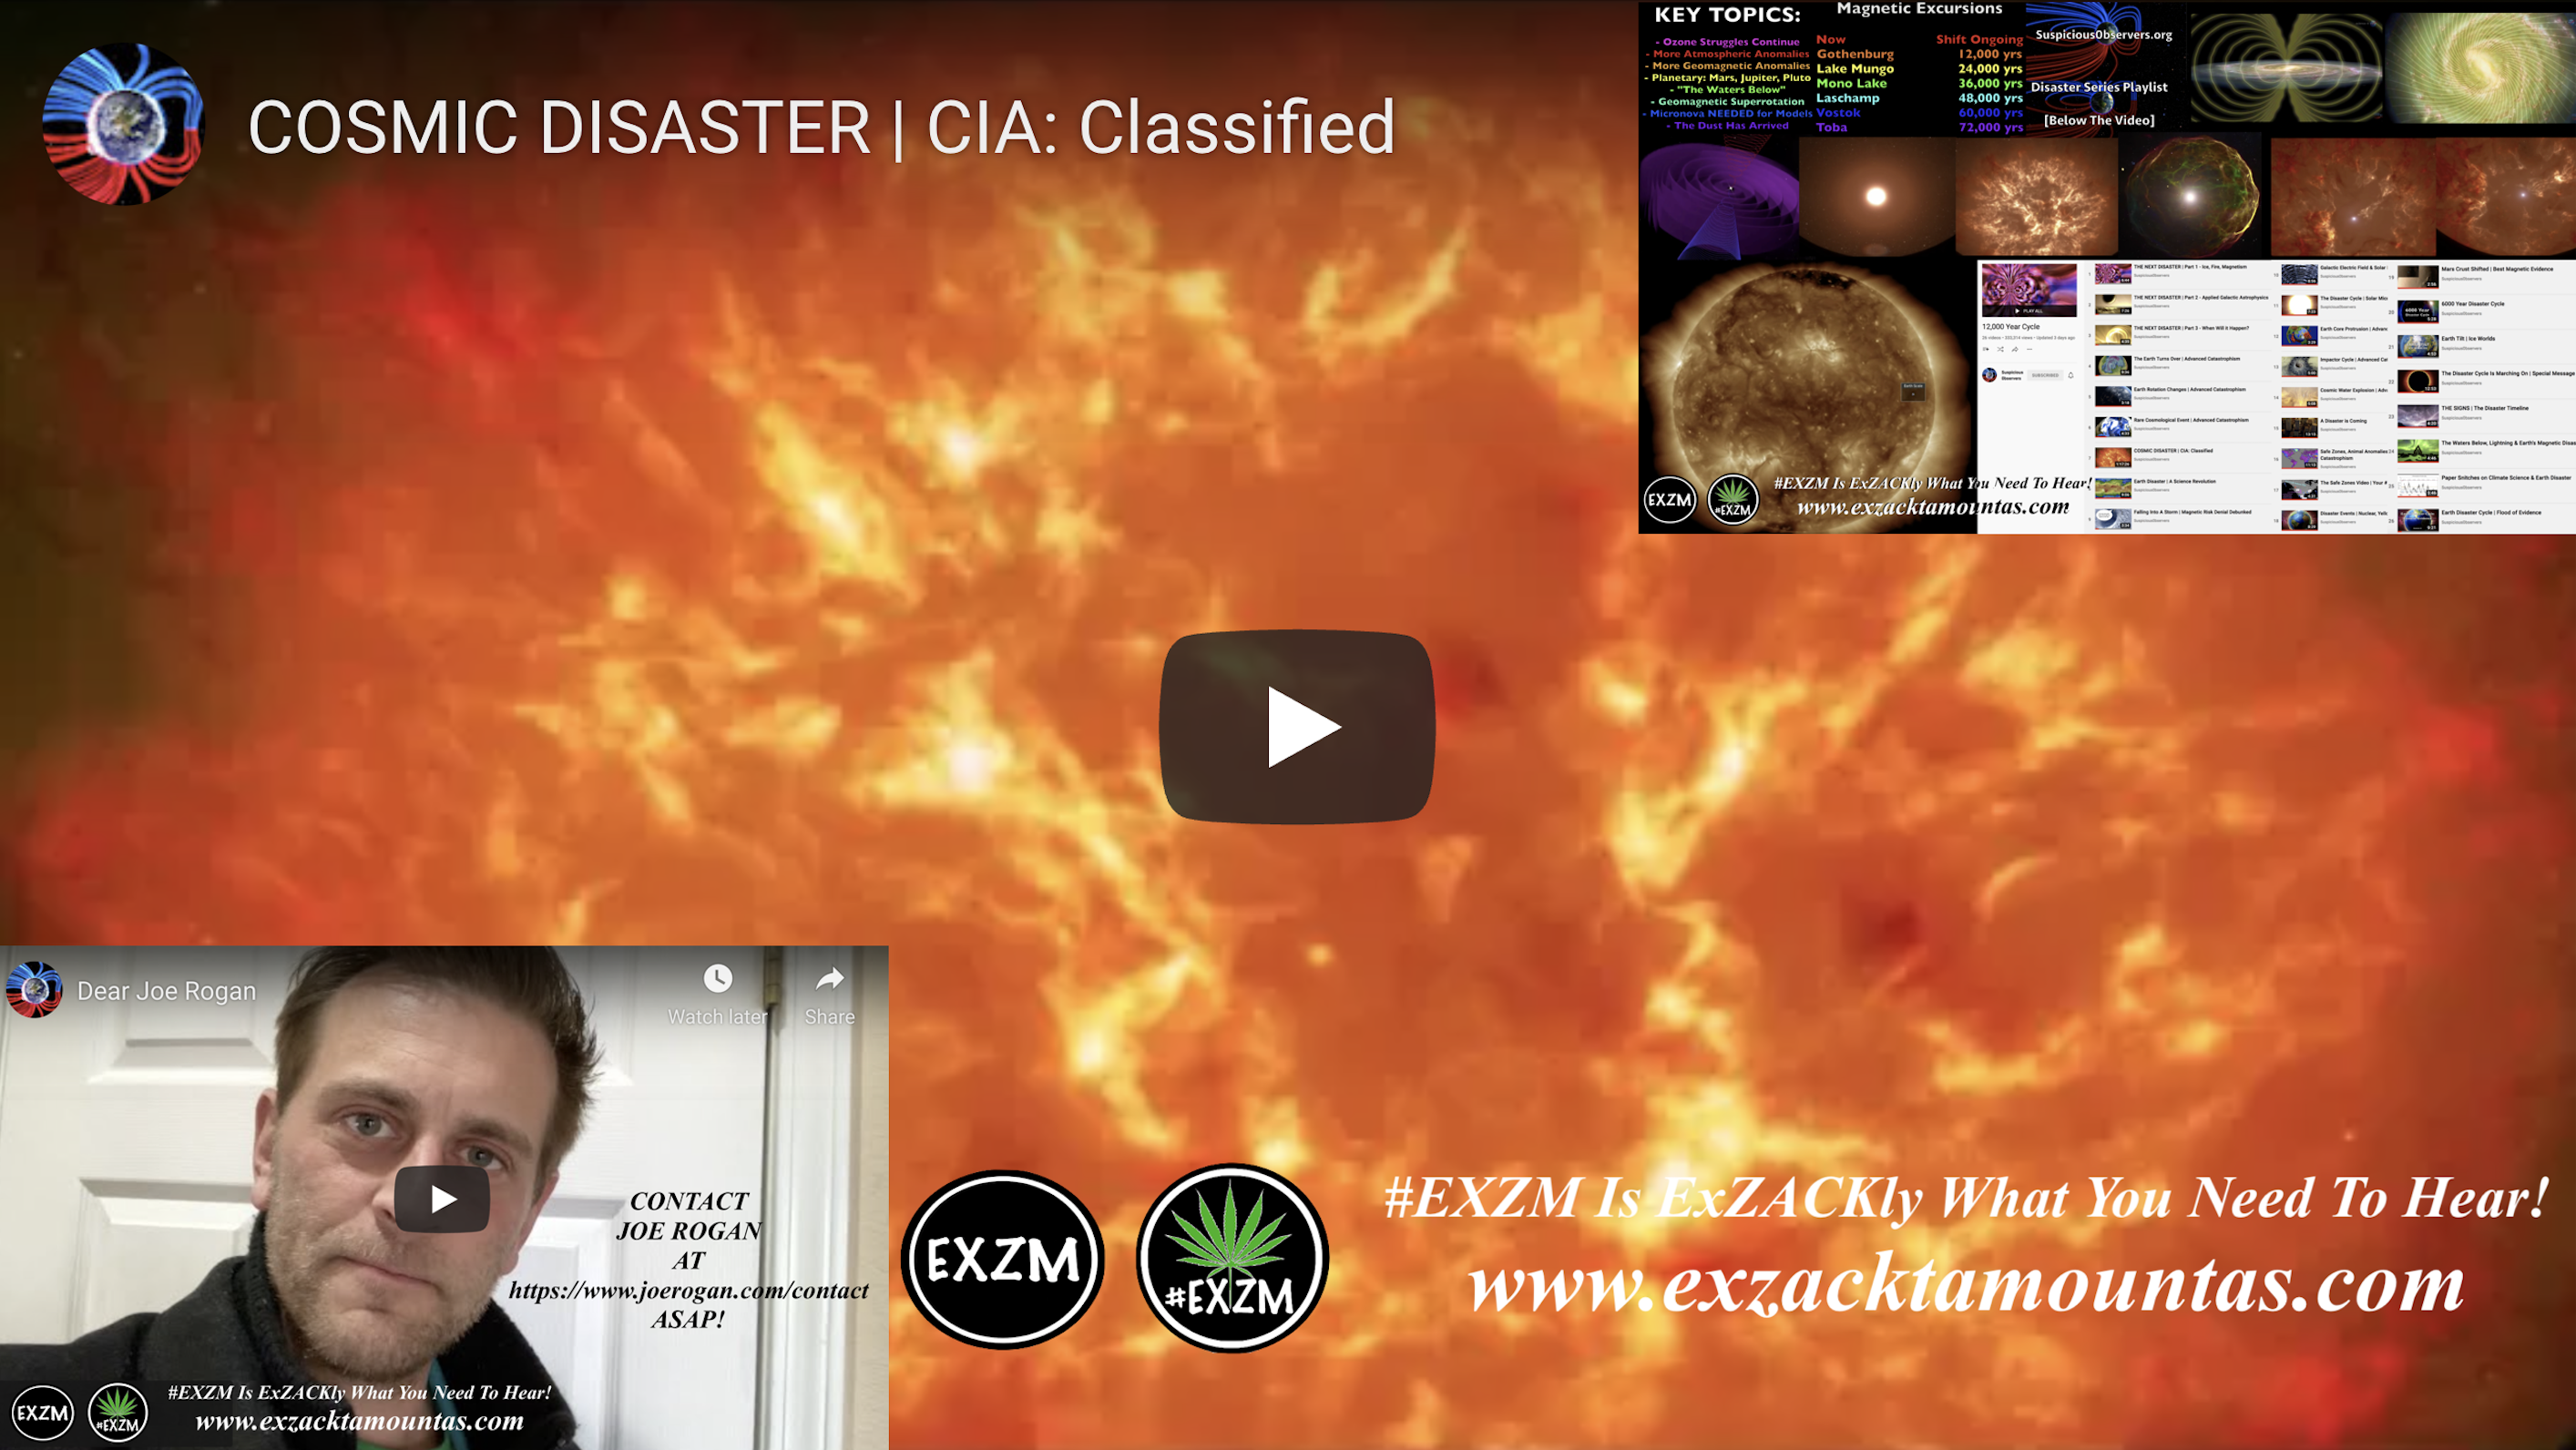 Suspicious Observers Post COSMIC DISASTER CIA Classified Premiered August 14th 2019 DEAR JOE ROGAN CONTACT JOE ROGAN EXZM Zack Mount December 14th 2021